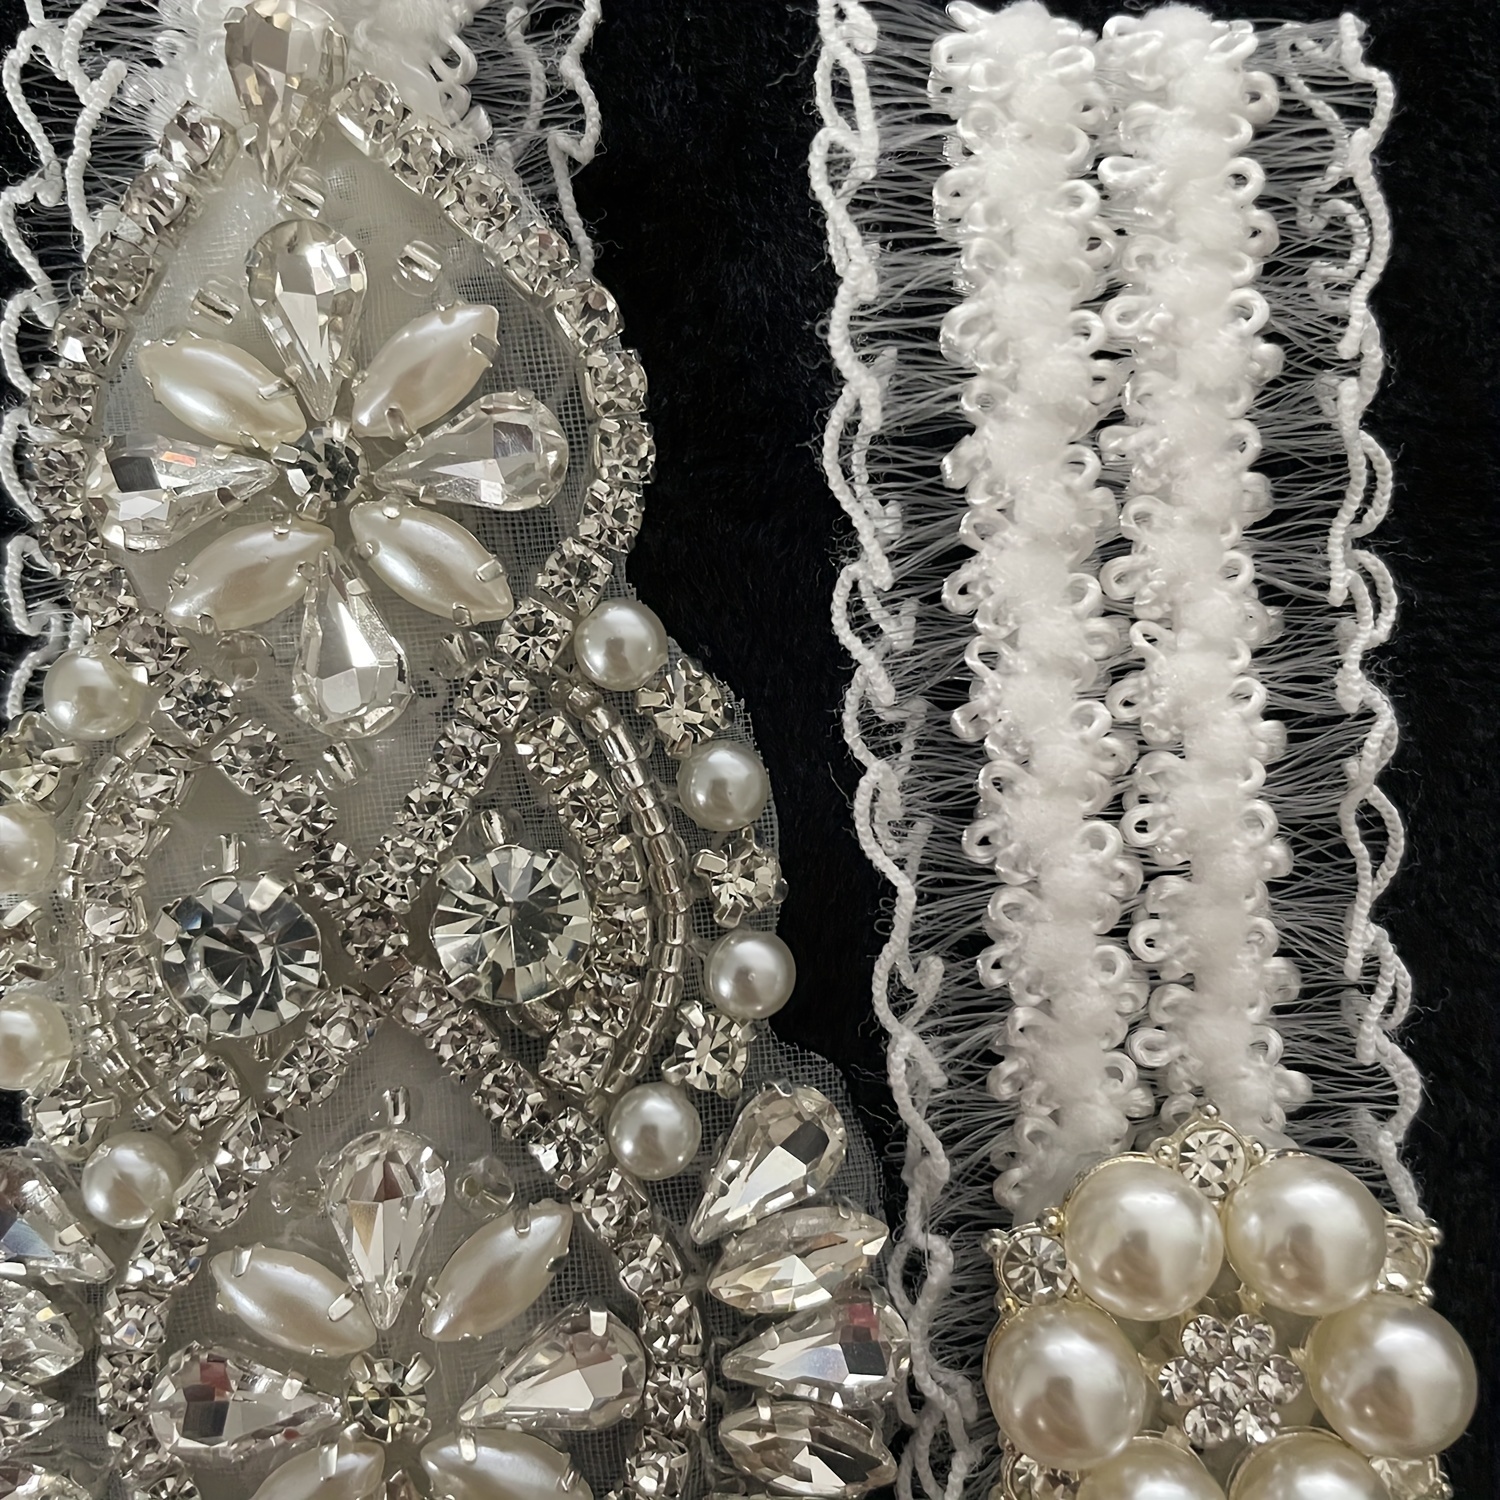 Elegant Wedding Garter Set With Crystals and Rhinestones